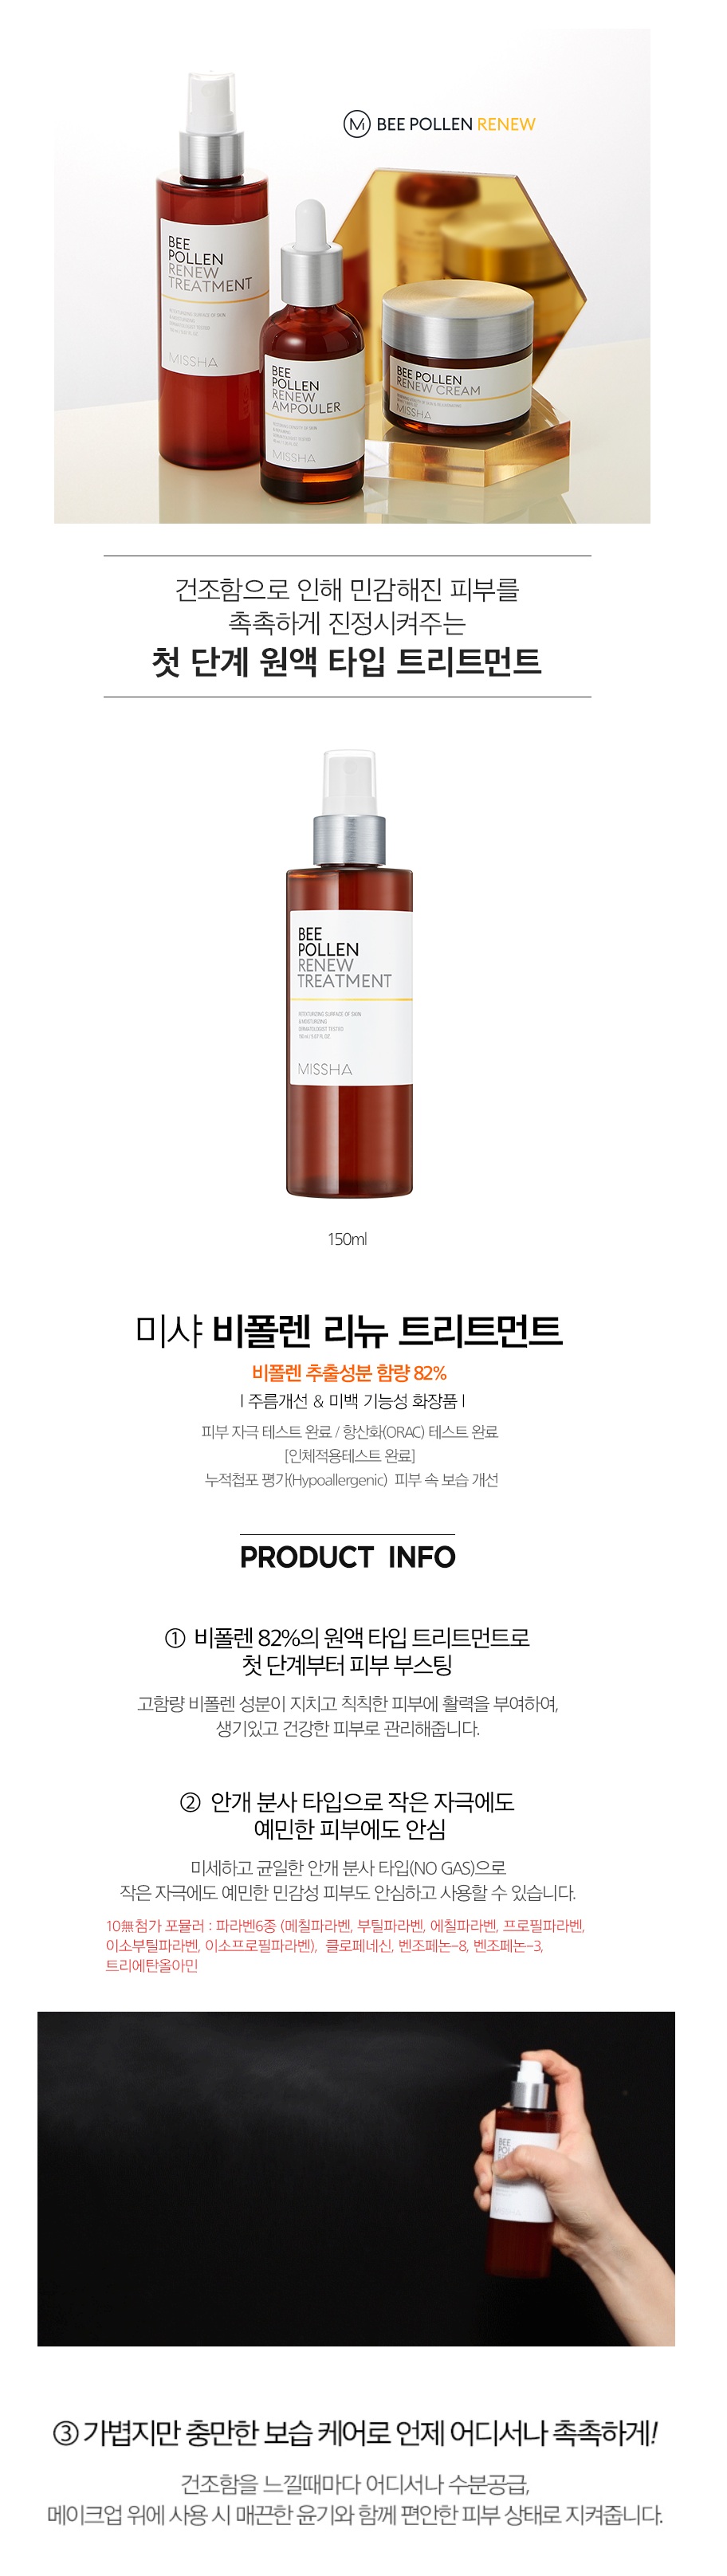 Missha Bee Pollen Renew Treatment korean skincare product online shop malaysia china india1